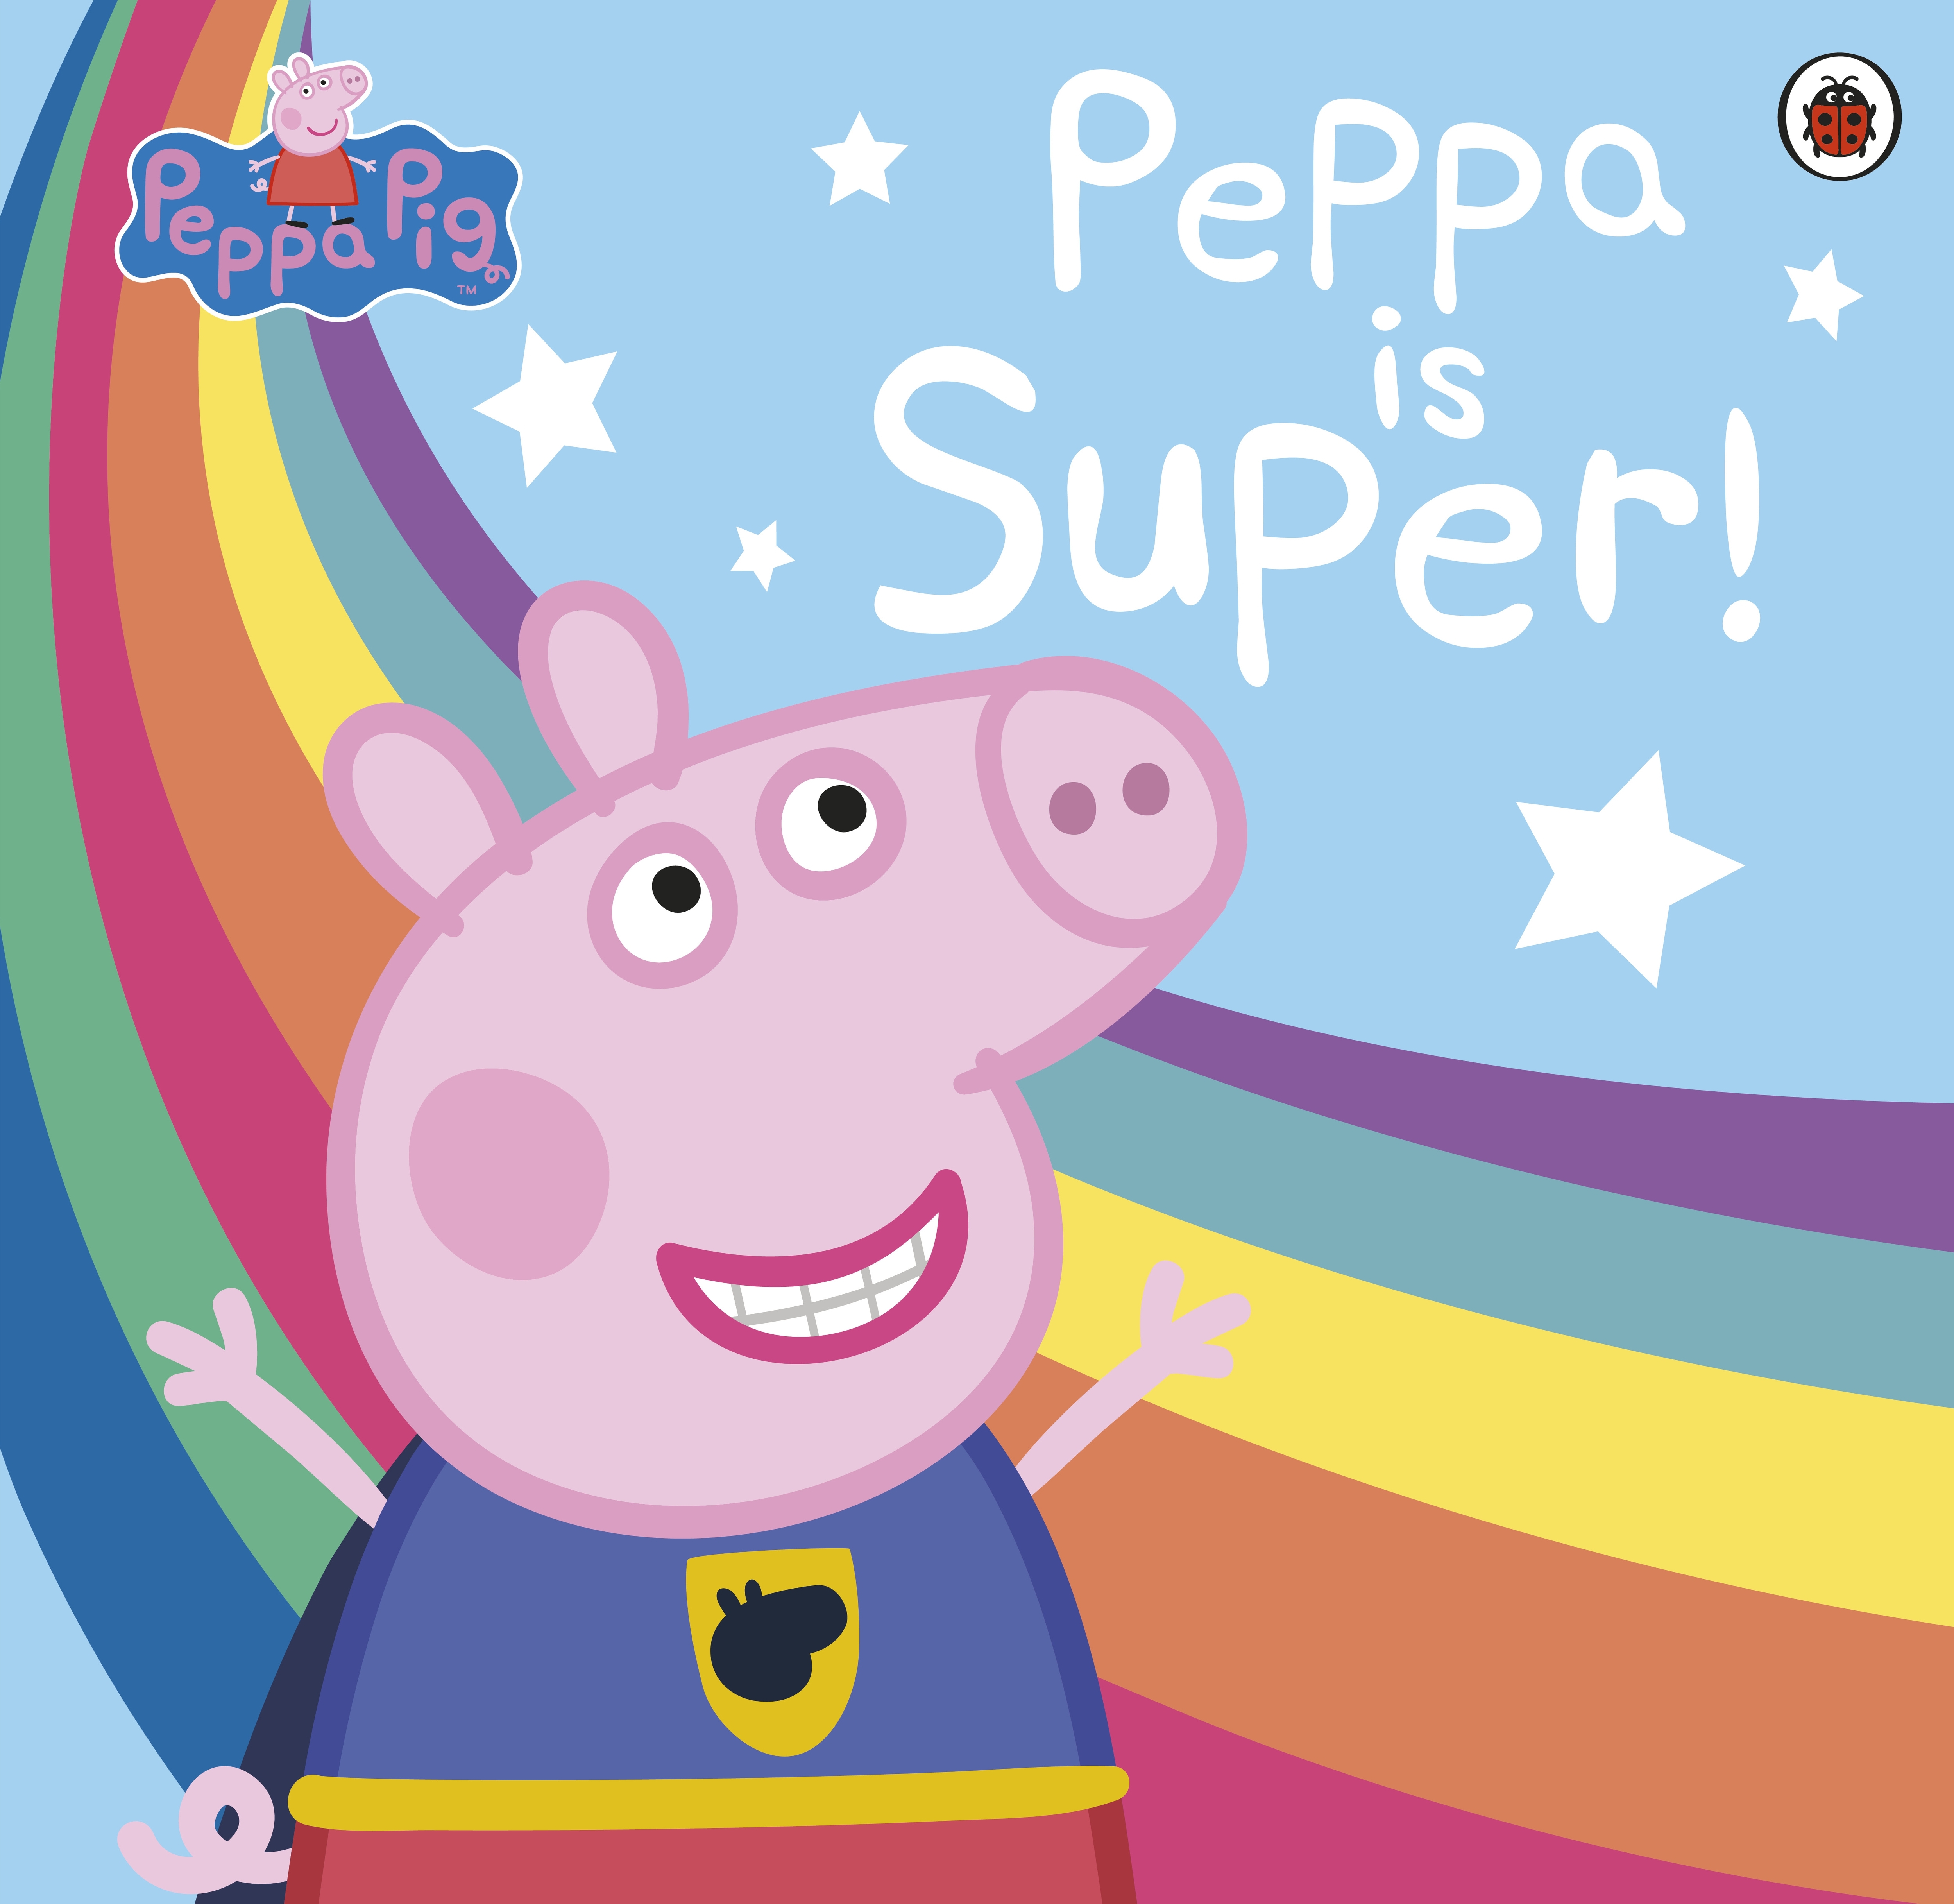 Peppa Pig: Super Peppa! by Peppa Pig - Penguin Books Australia